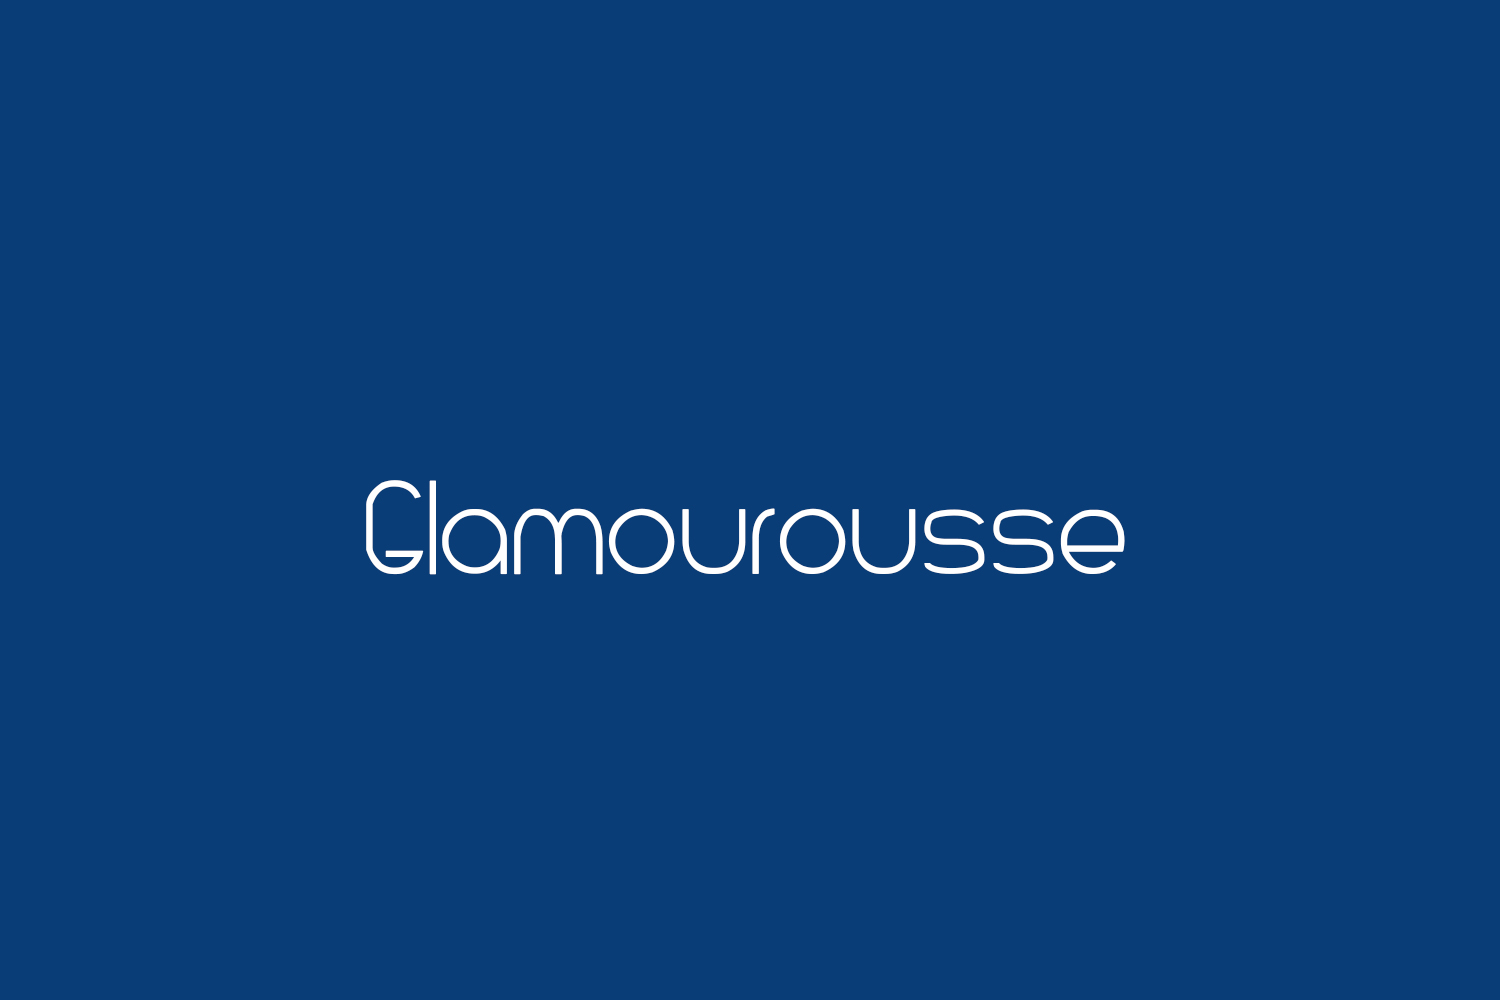 Glamourousse Free Font